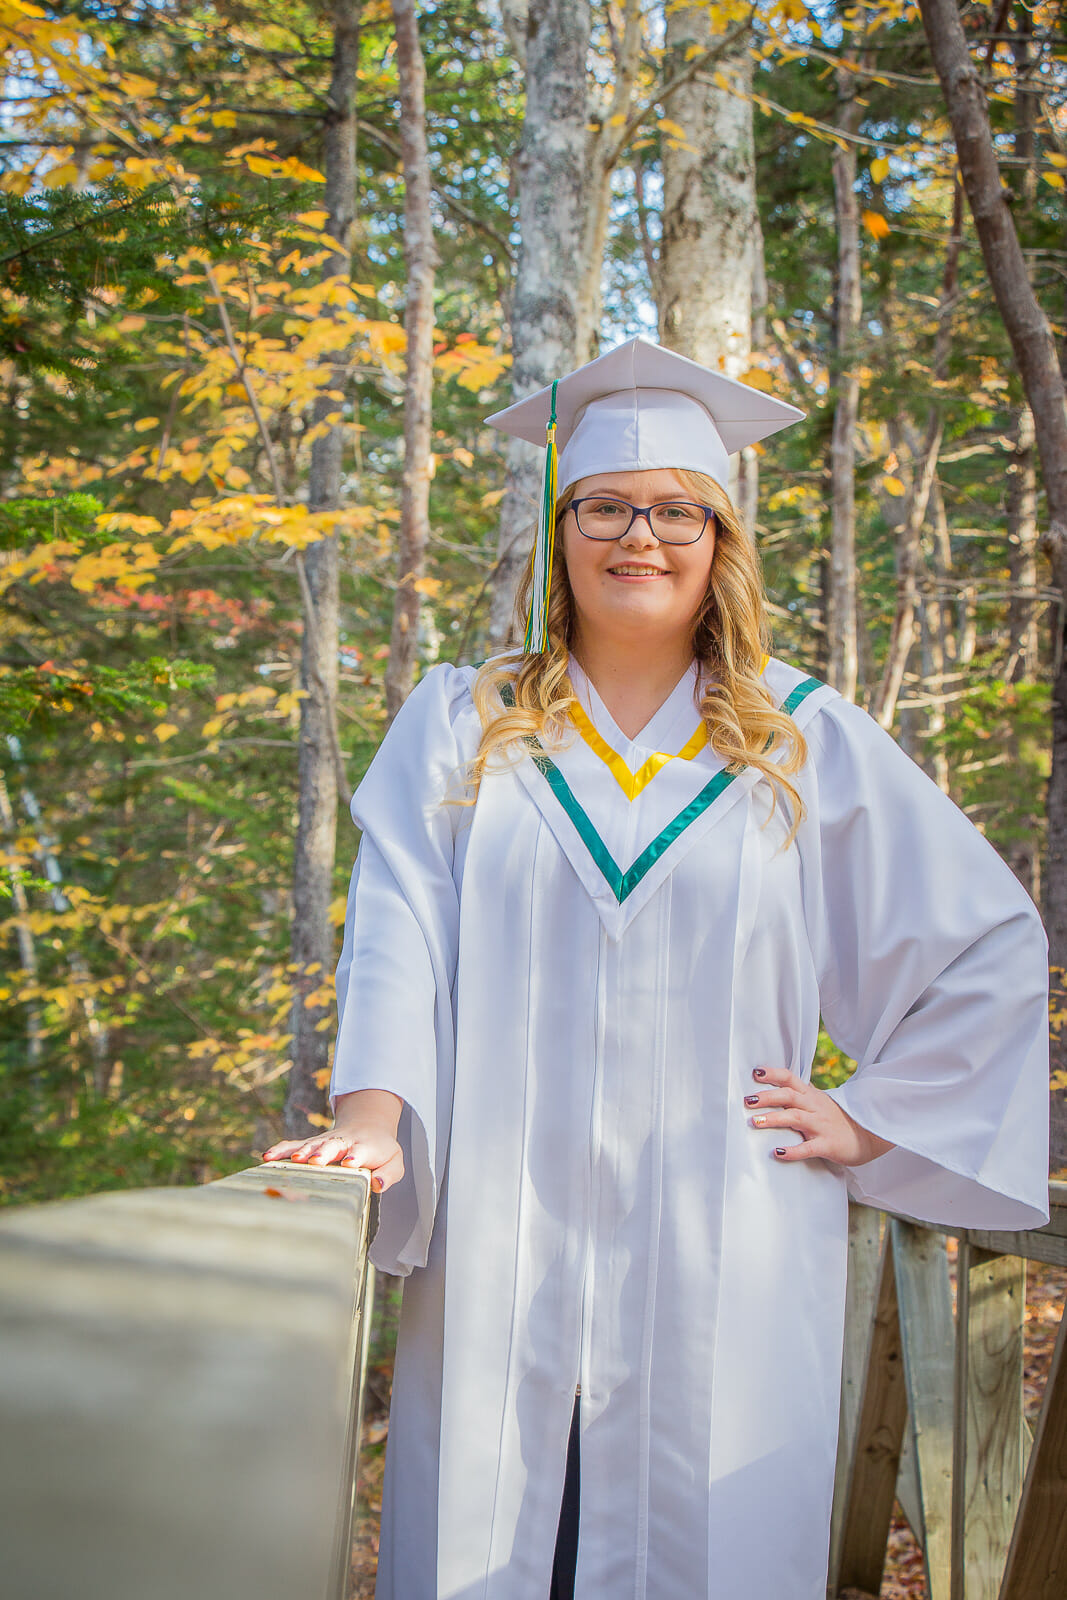 A photo of Kaitlyn Marshall for her graduation photos